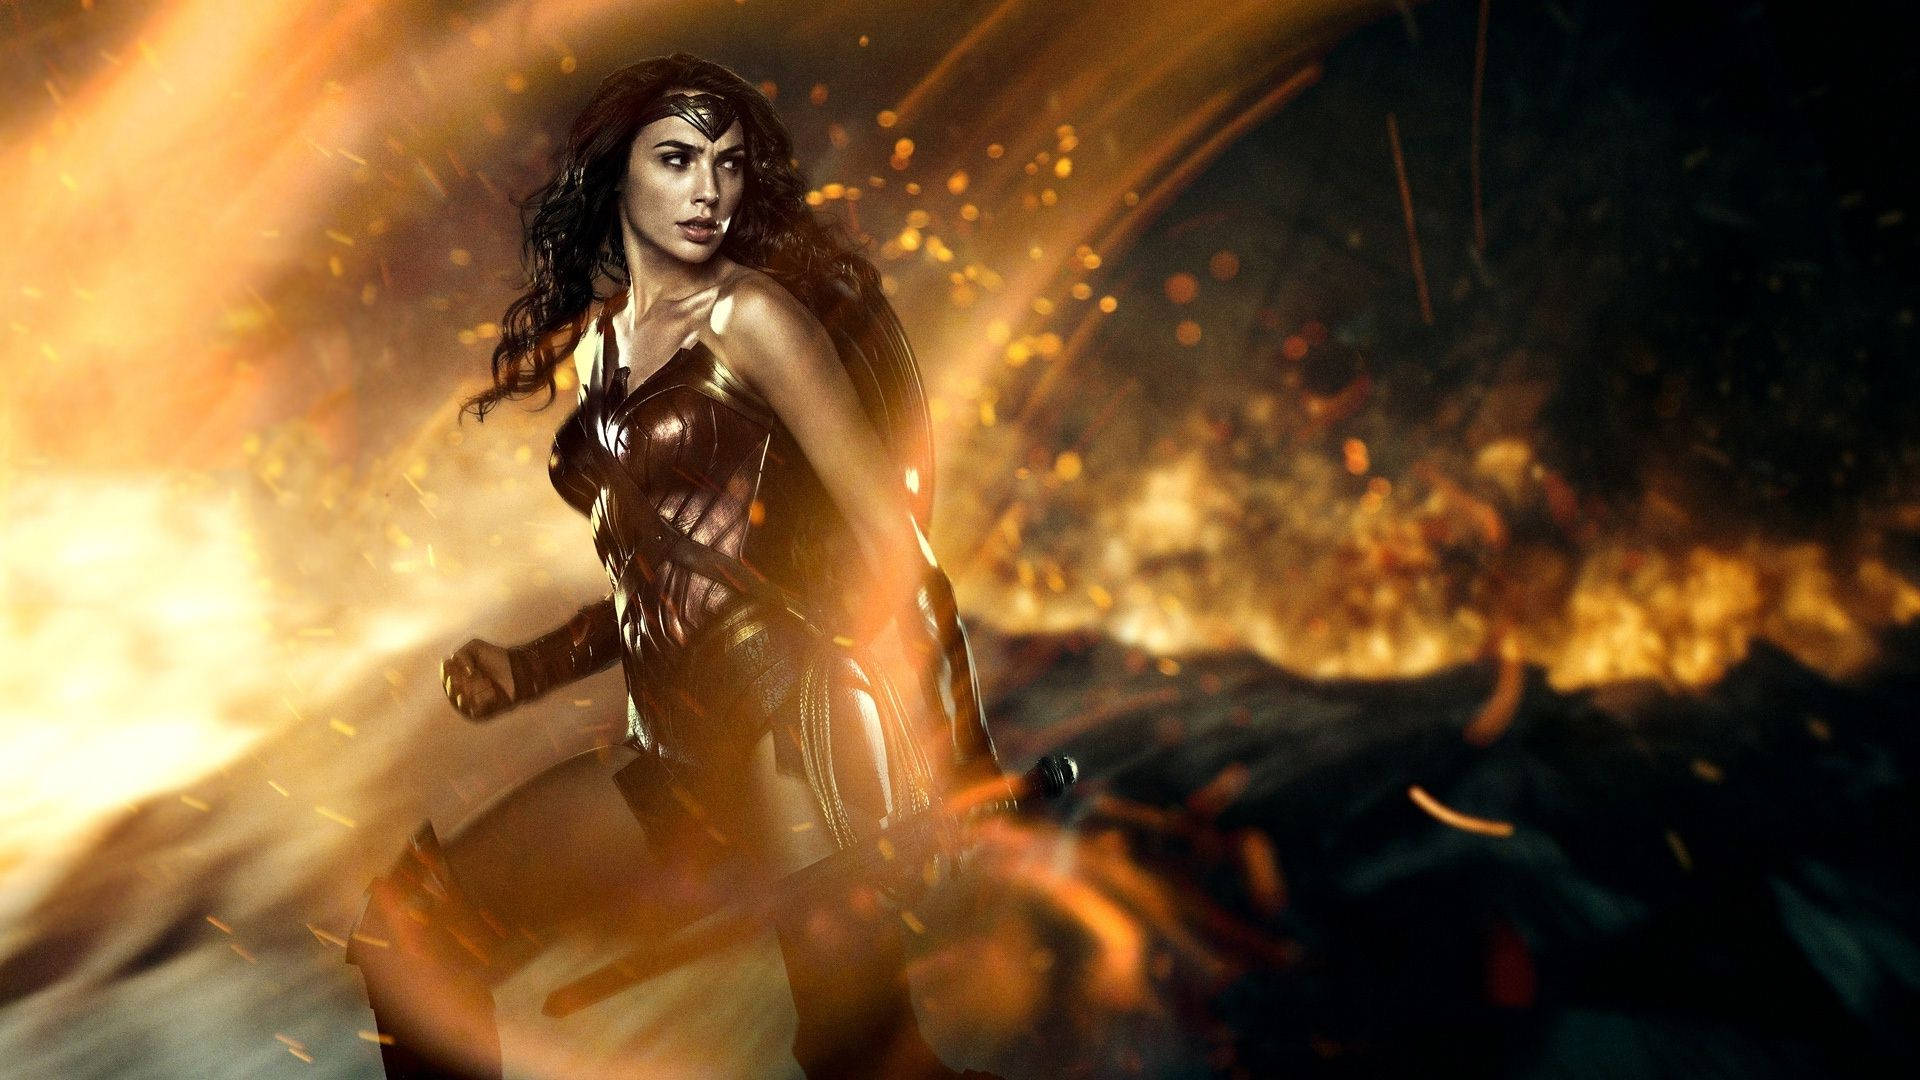 "Wonder Woman Spreads Her Blazing Power" Wallpaper